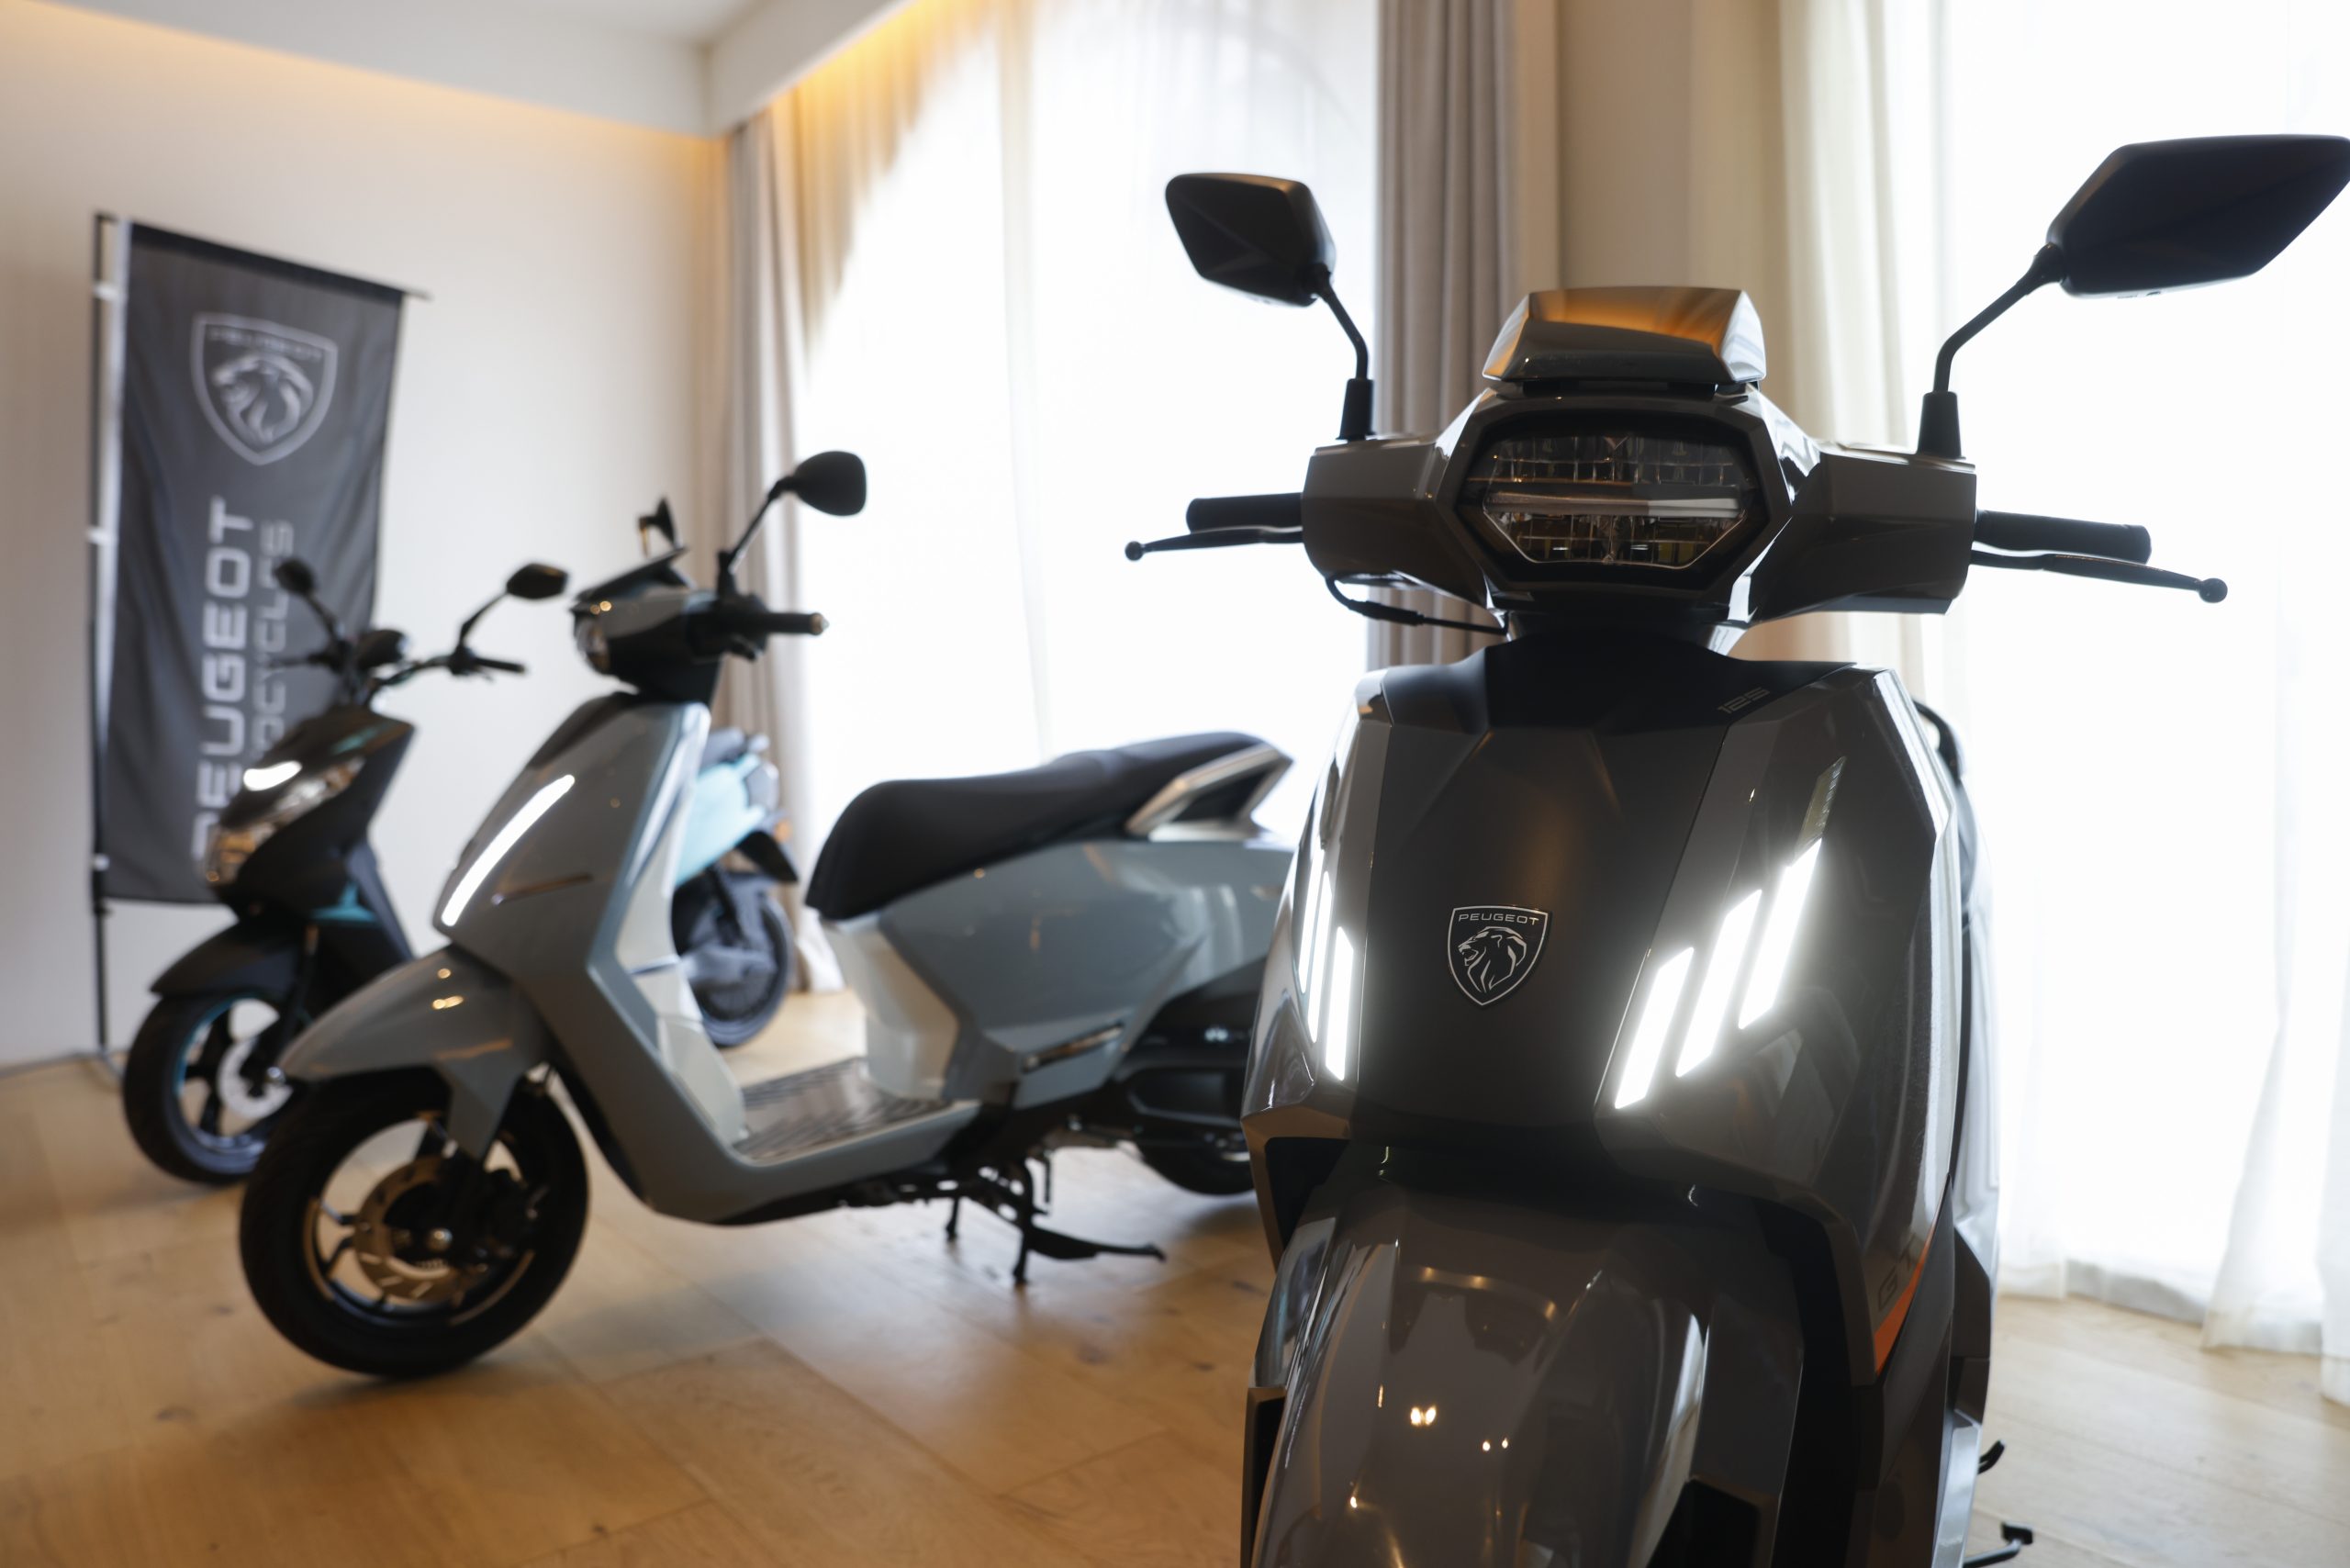 Futuros modelos en primicia de Peugeot Motocycles presentados durante la presentación internacional a prensa